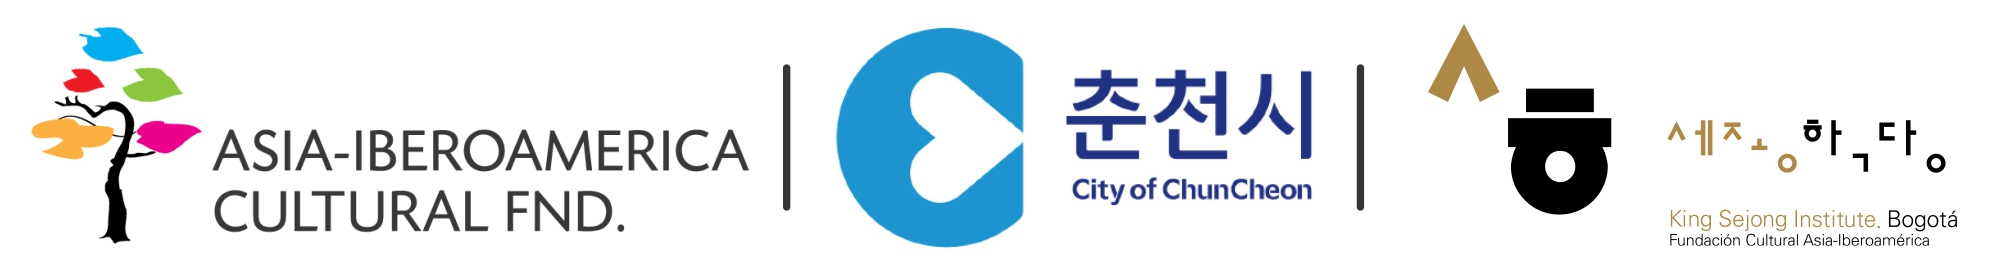 Programa de Beca Global de Chuncheon